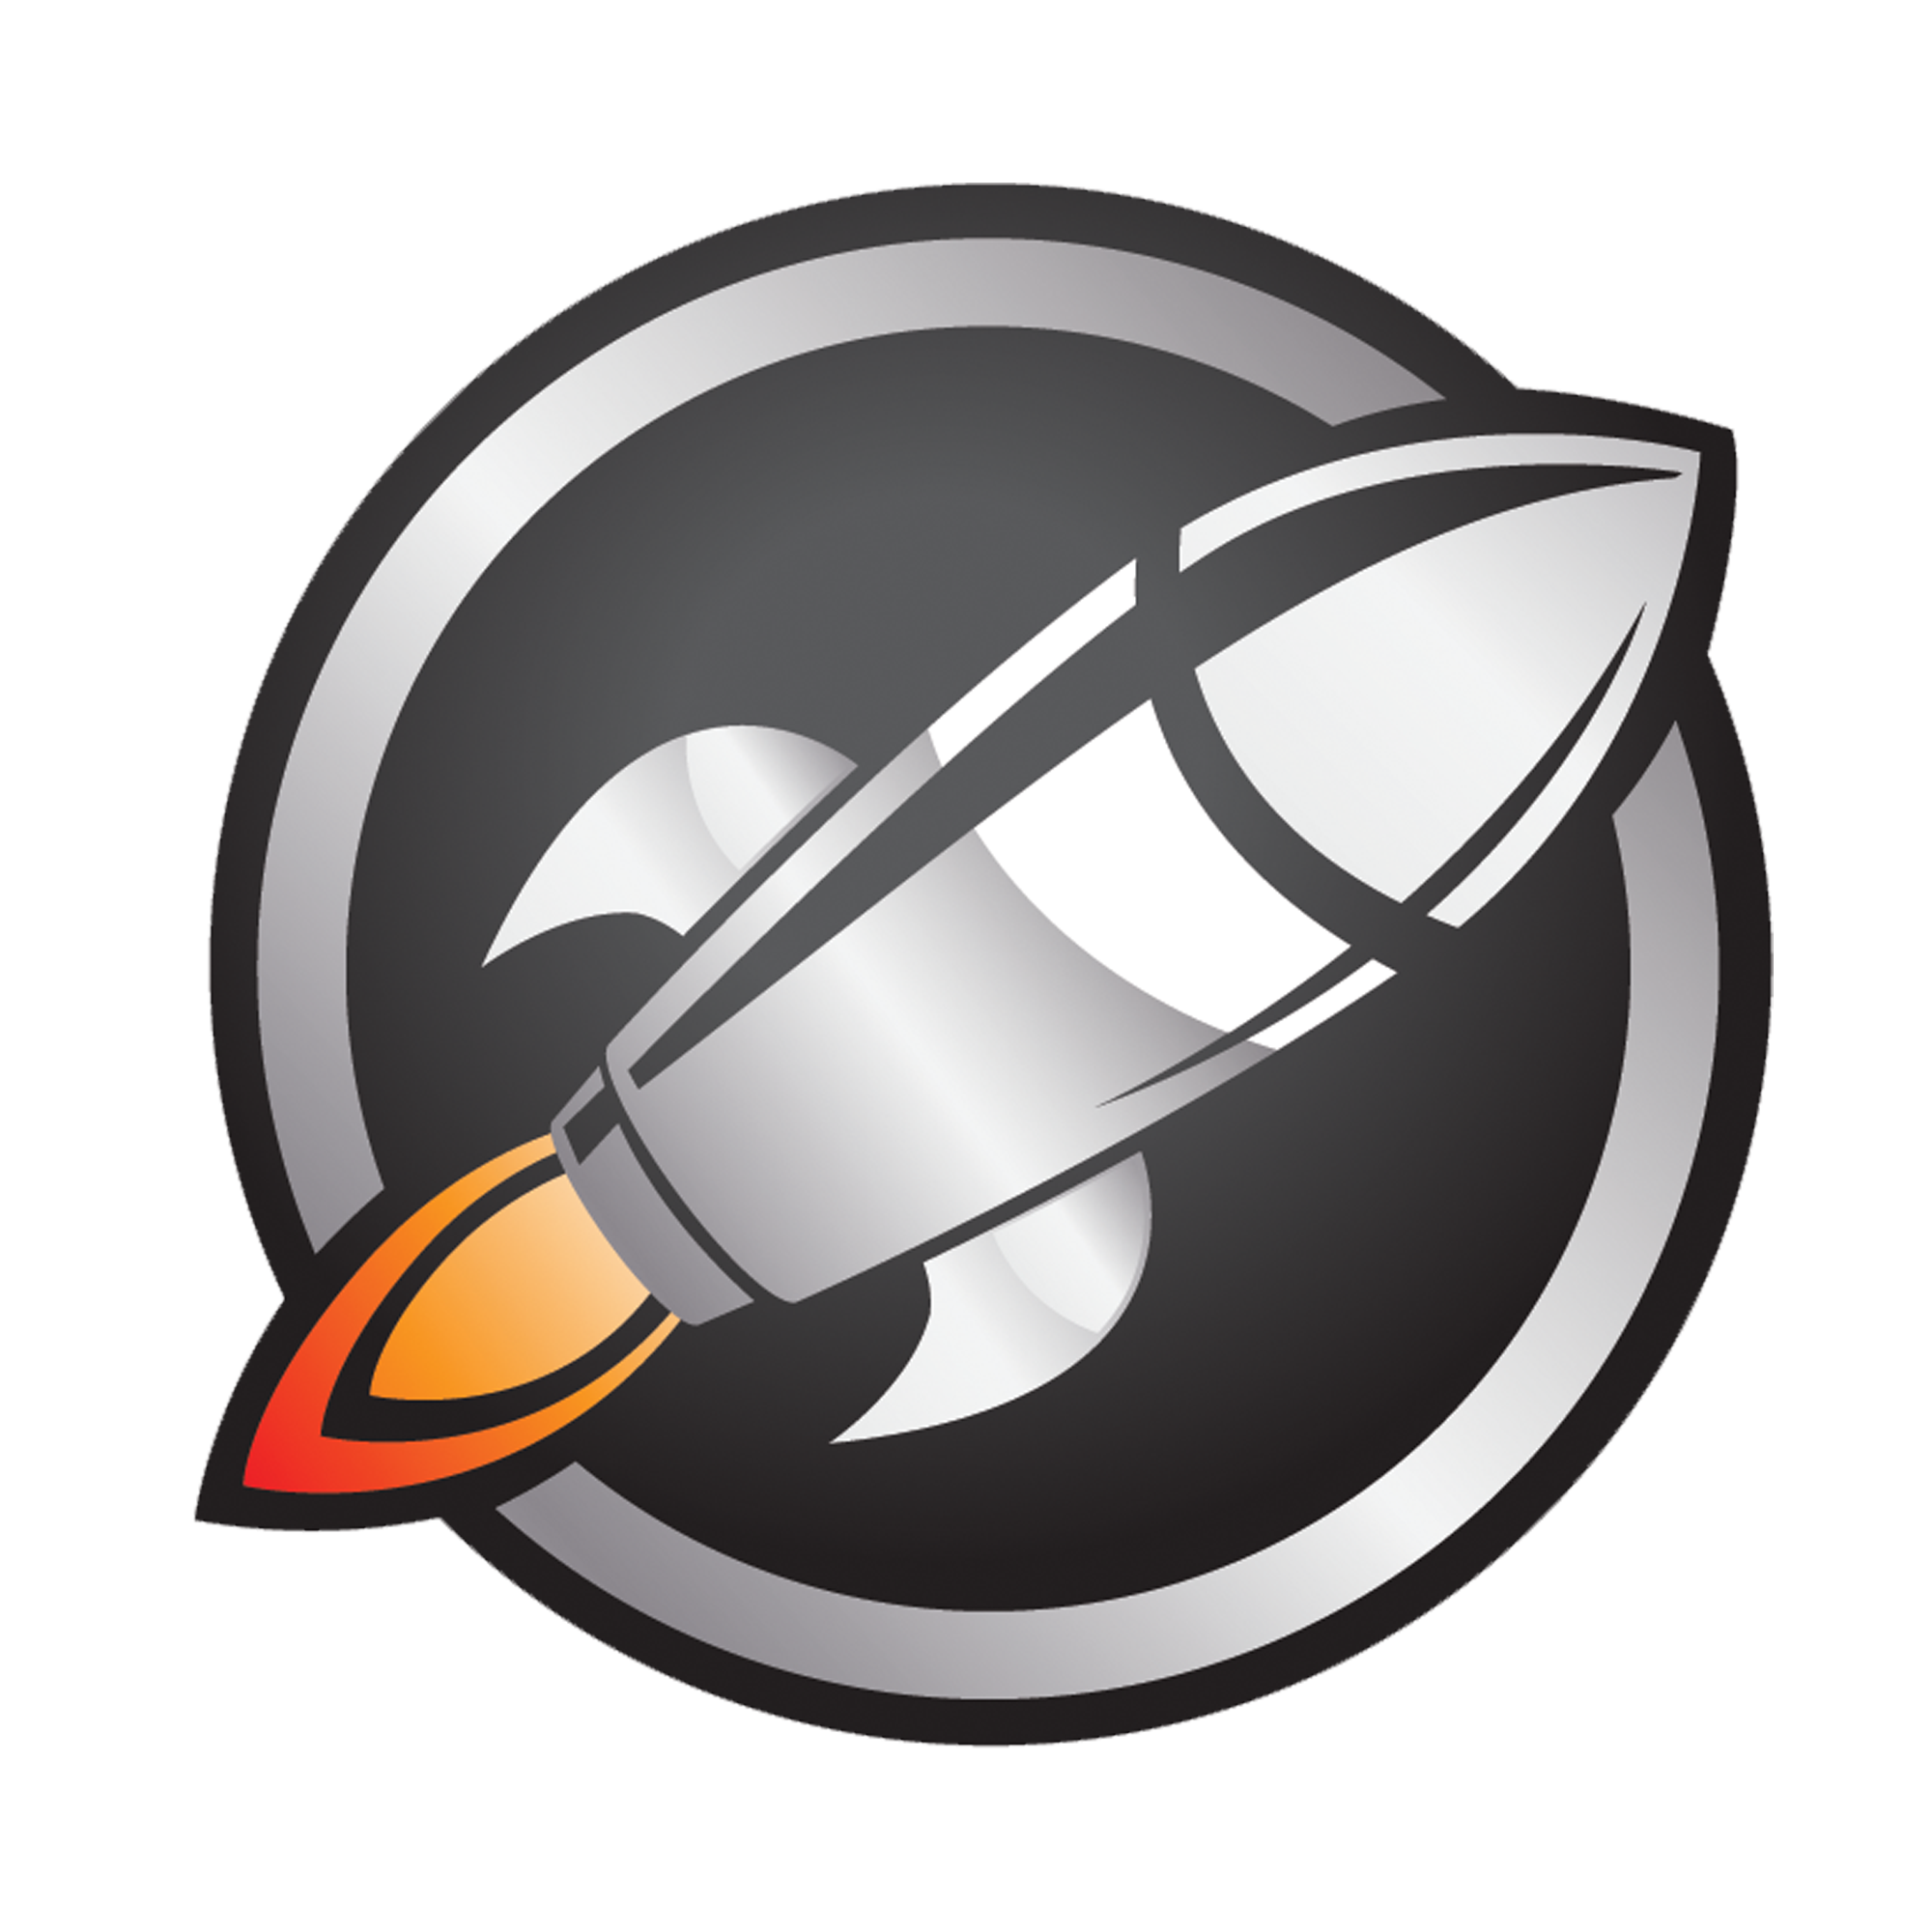 Agile Rocket's primary logo